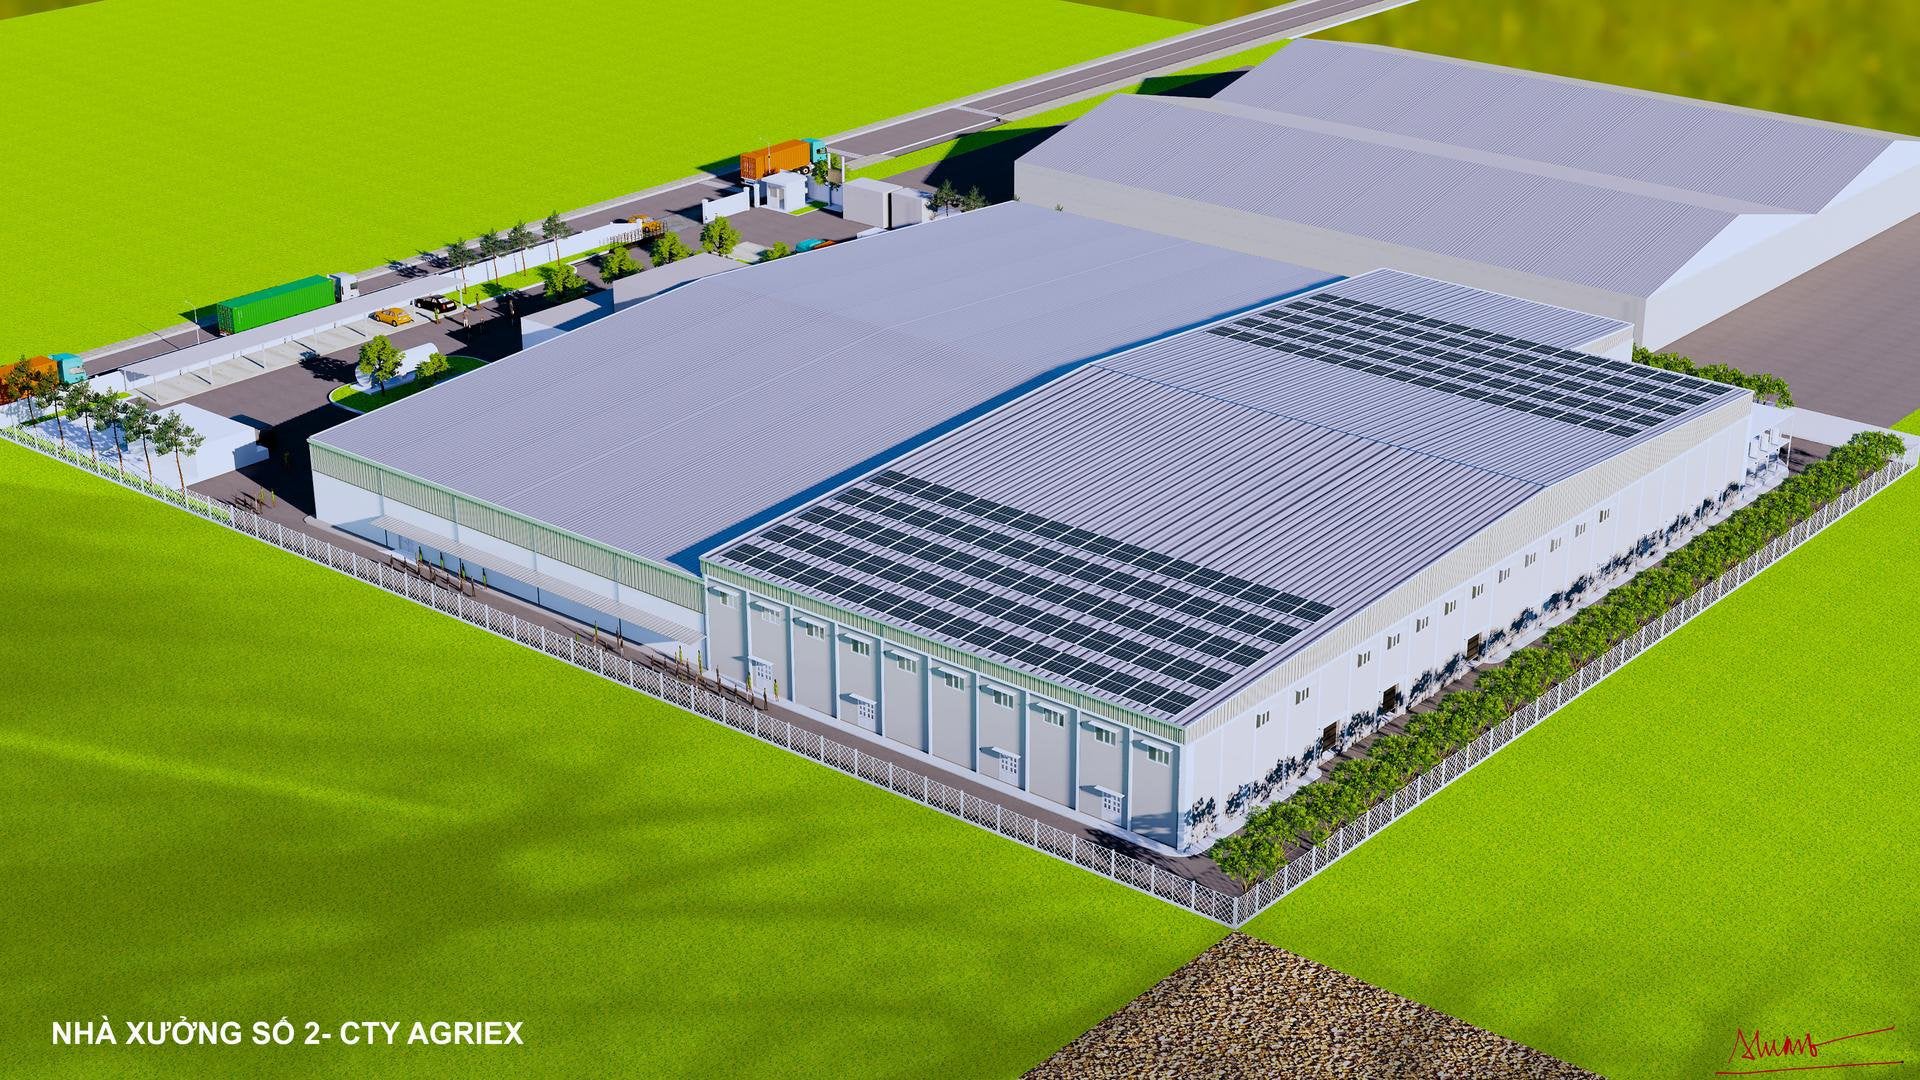 HOLUSベトナム法人AGRIEXが新工場の建設を決定